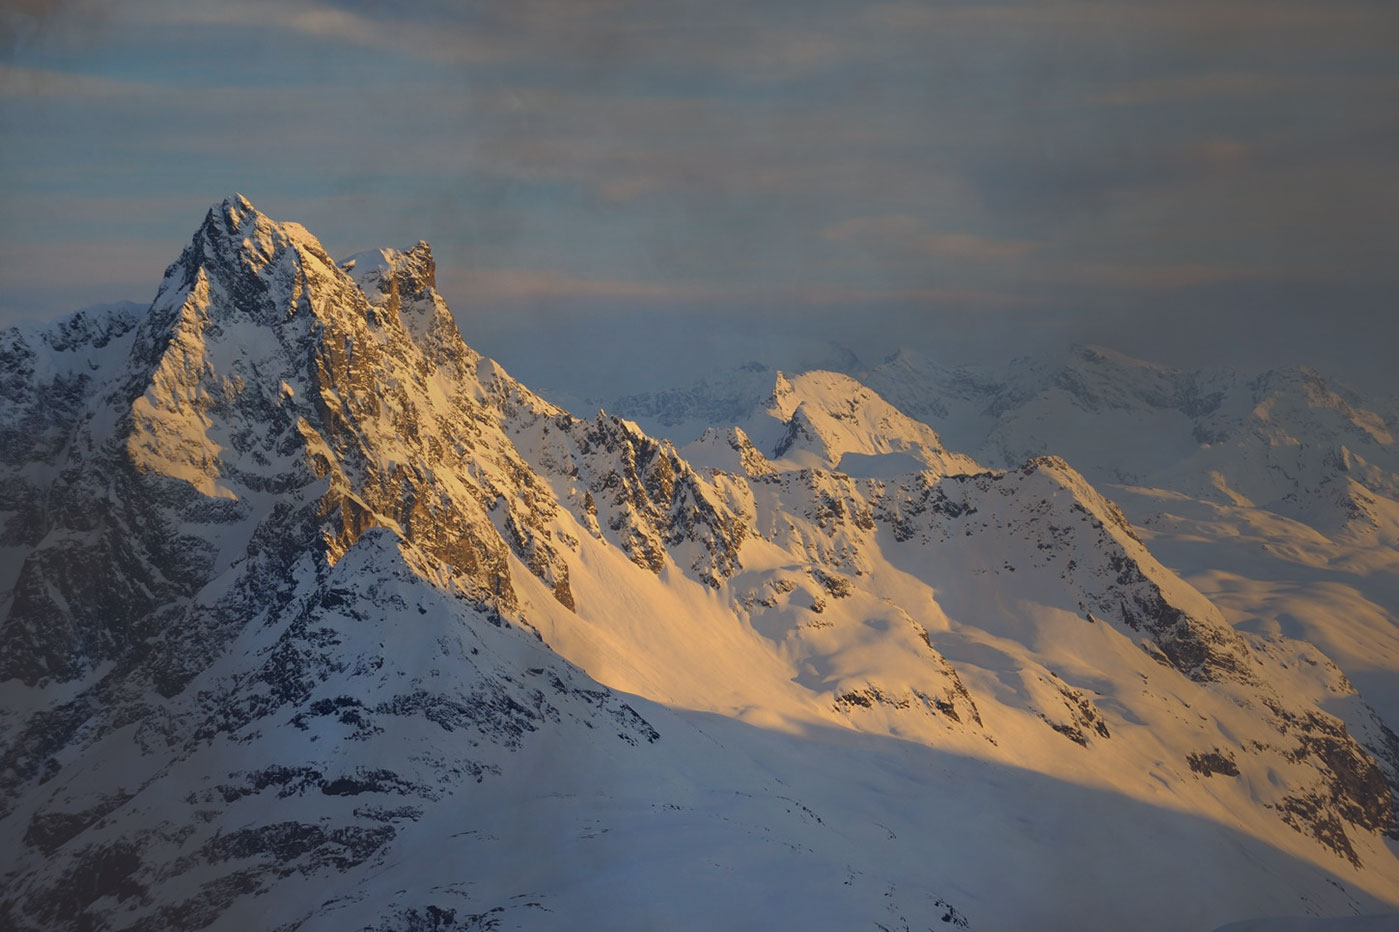 Winterurlaub am Arlberg